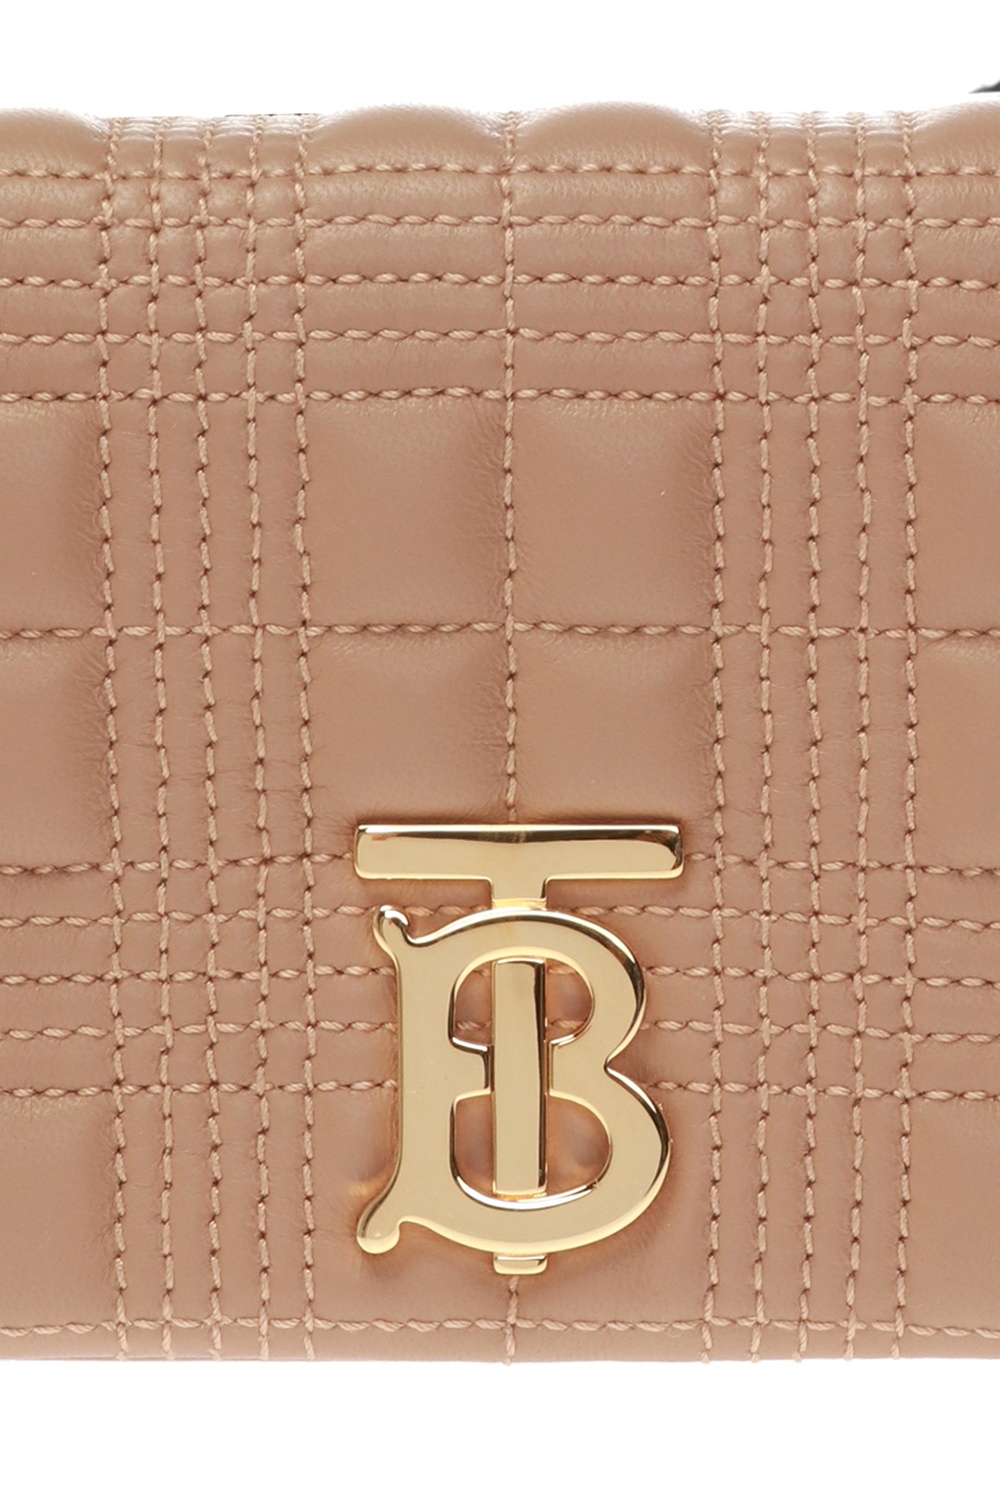 Belt bags Burberry - Lola leather bum bag - 8028871